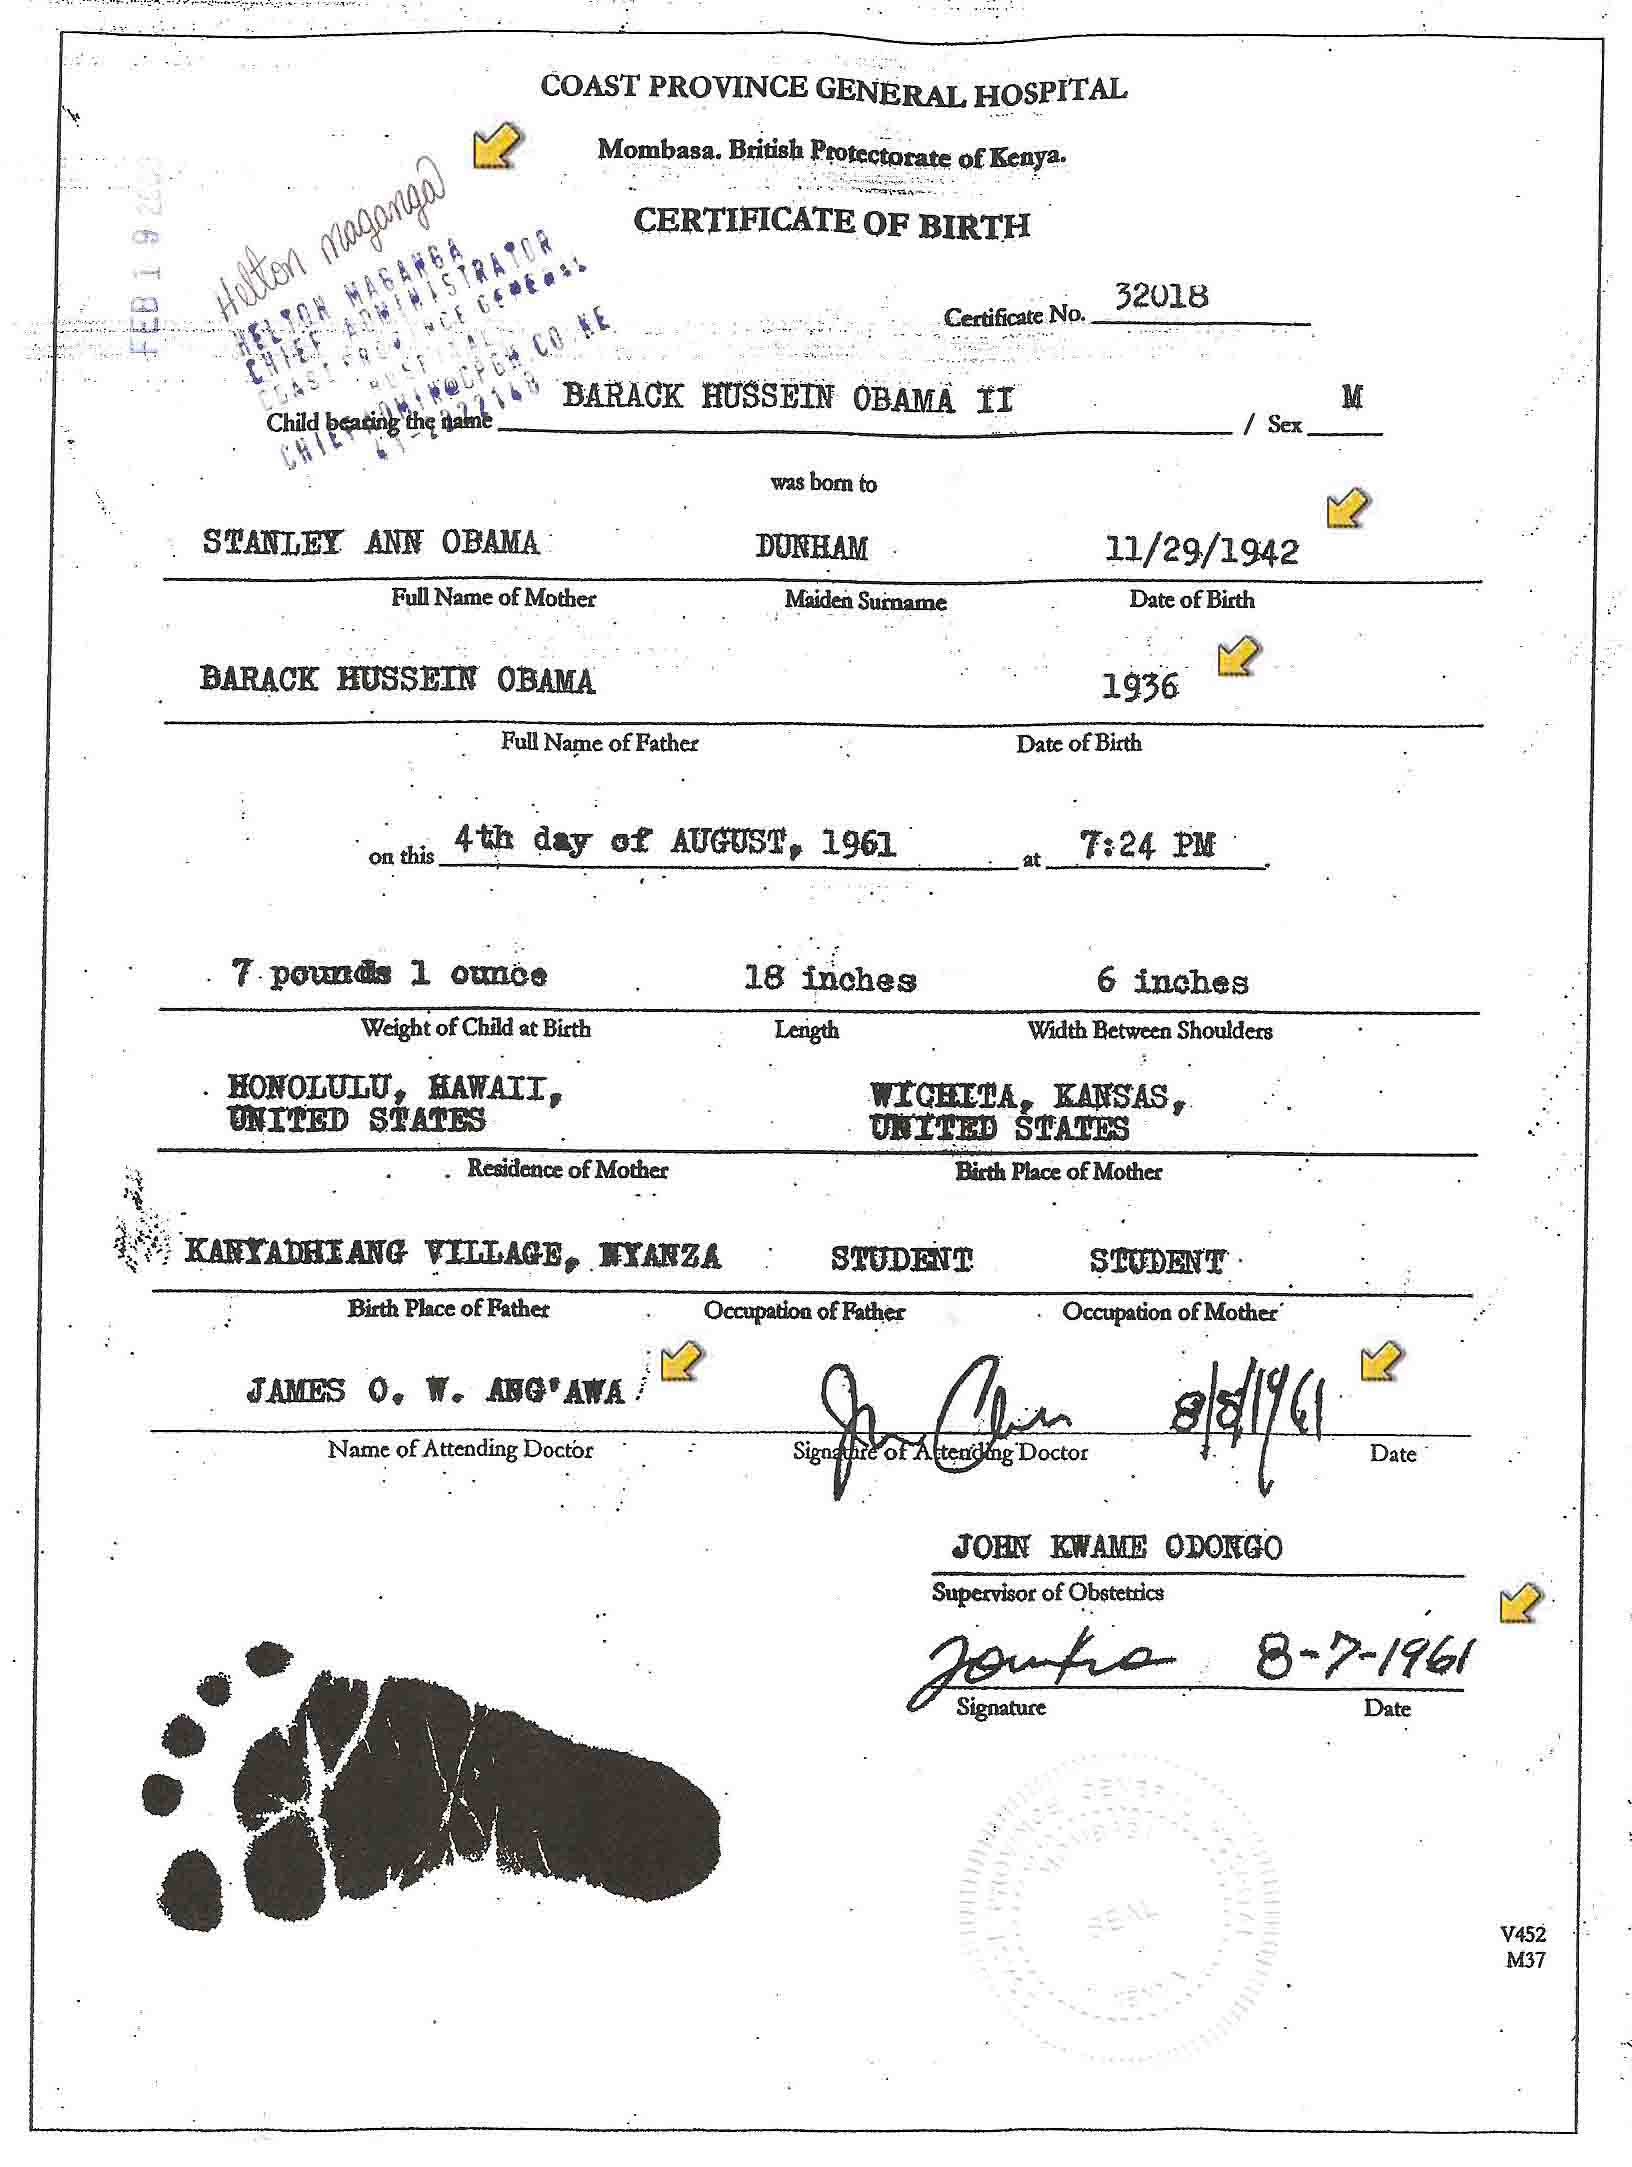 Barack_Hussein_Obama_Kenyan_Birth_Certificate.jpg